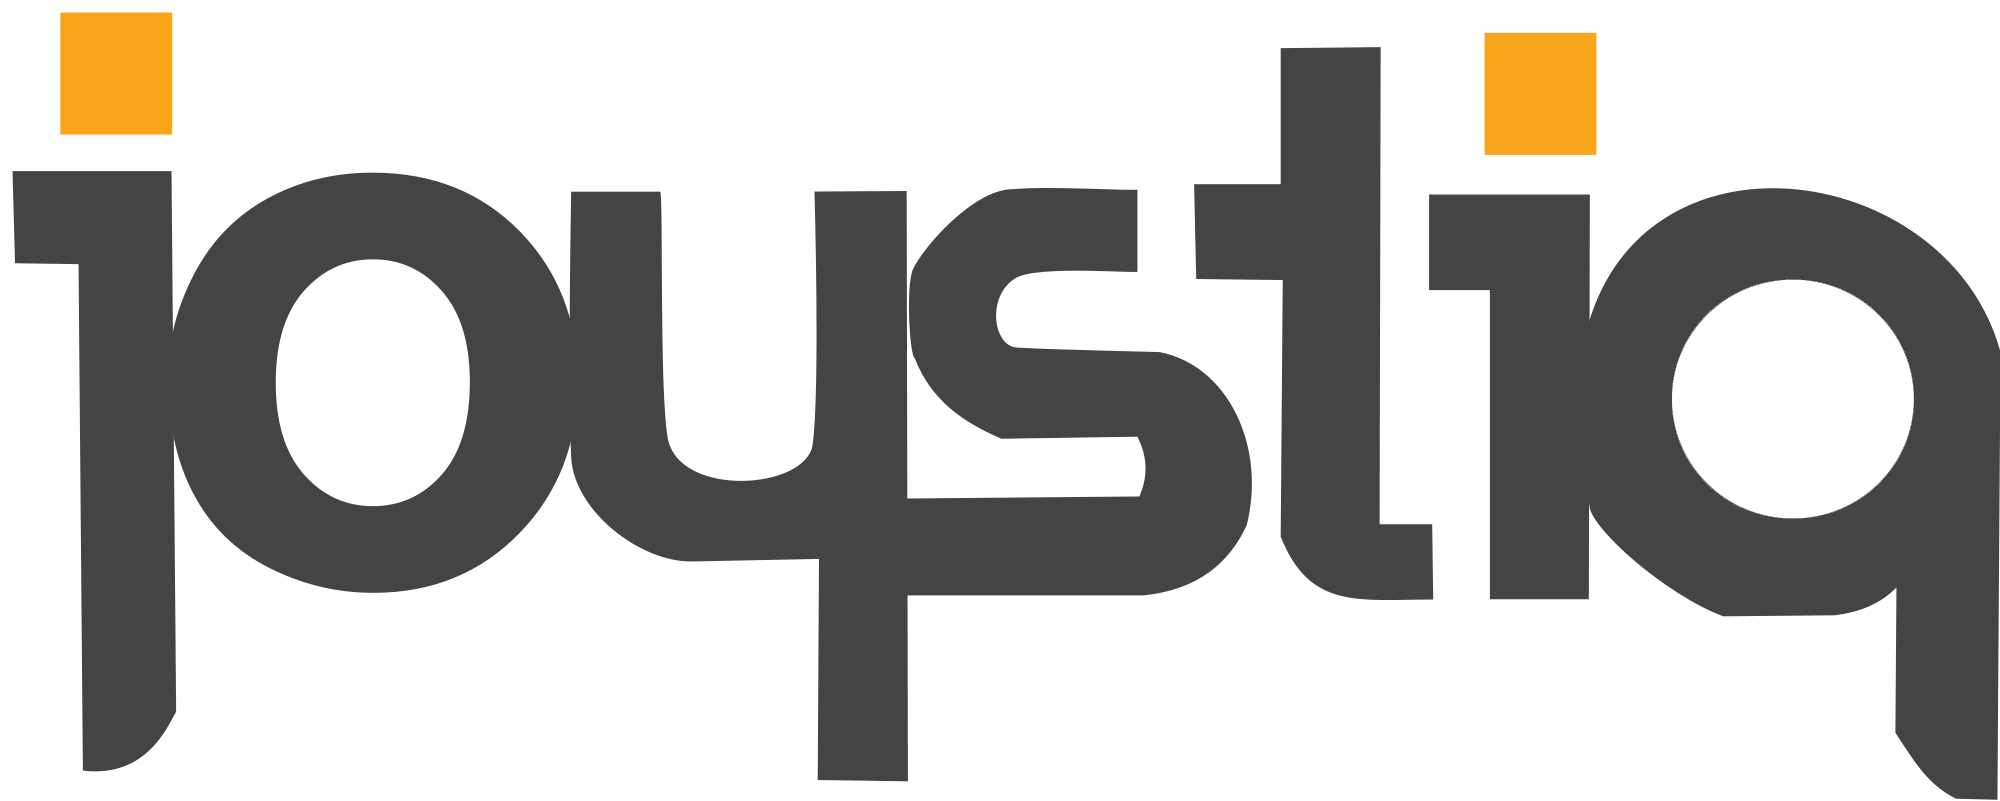 Joystiq Logo - Joystiq | Logopedia | FANDOM powered by Wikia